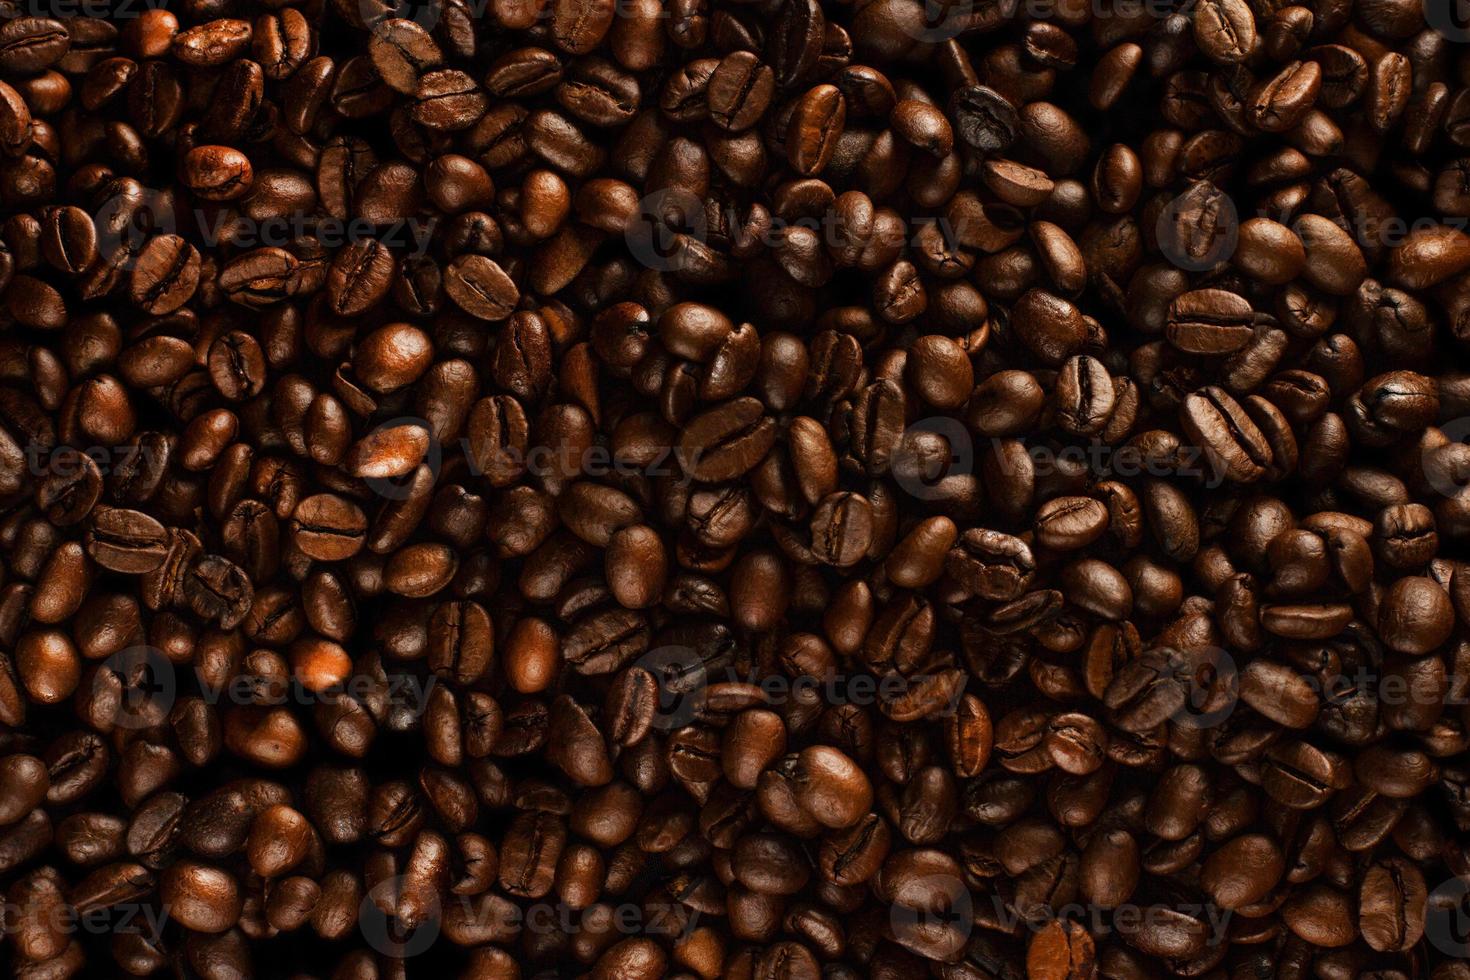 granos de café tostados. granos de café con diseño de luz de bajo perfil foto